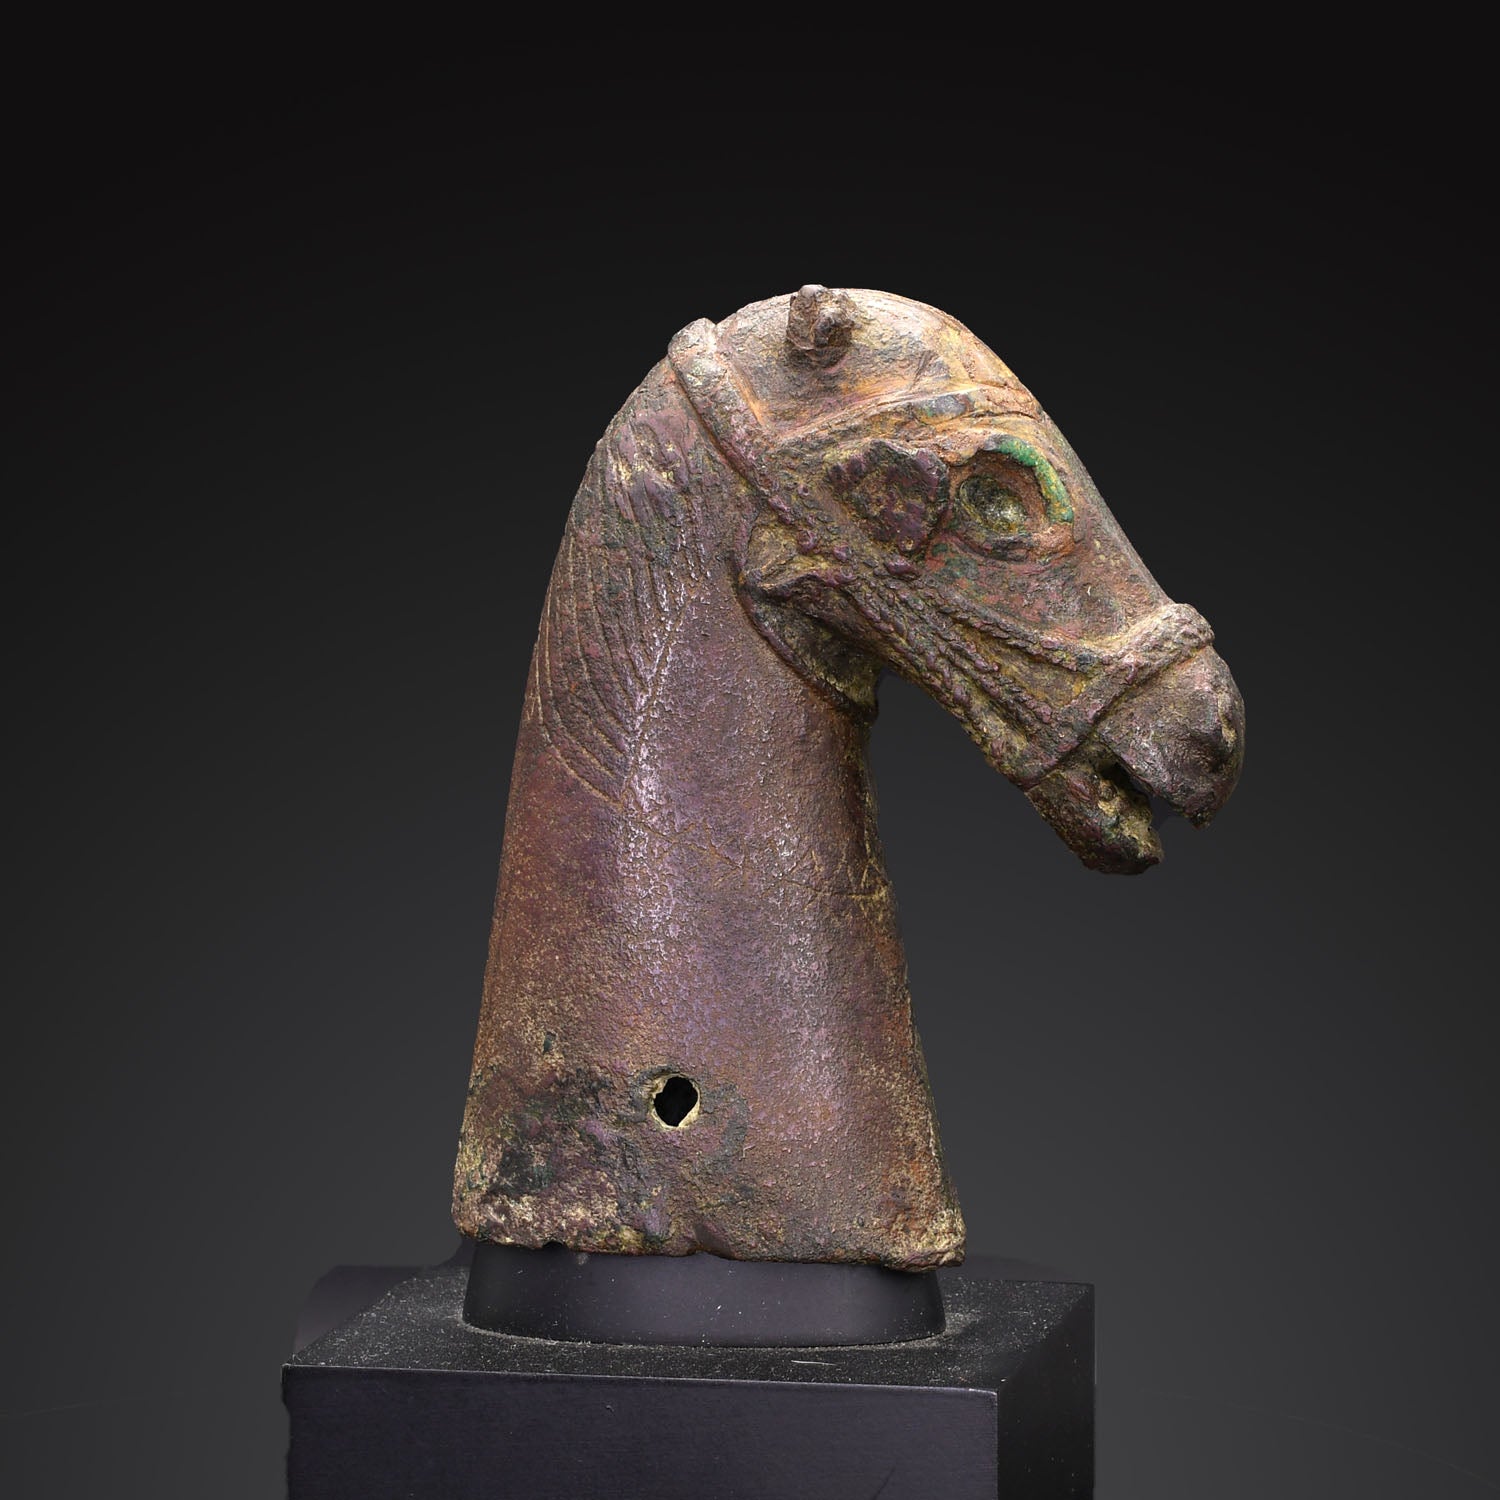 Rare Bronze Horse Head from the Biblical Land of Sheba, ca. 2nd century BCE - 1st century CE